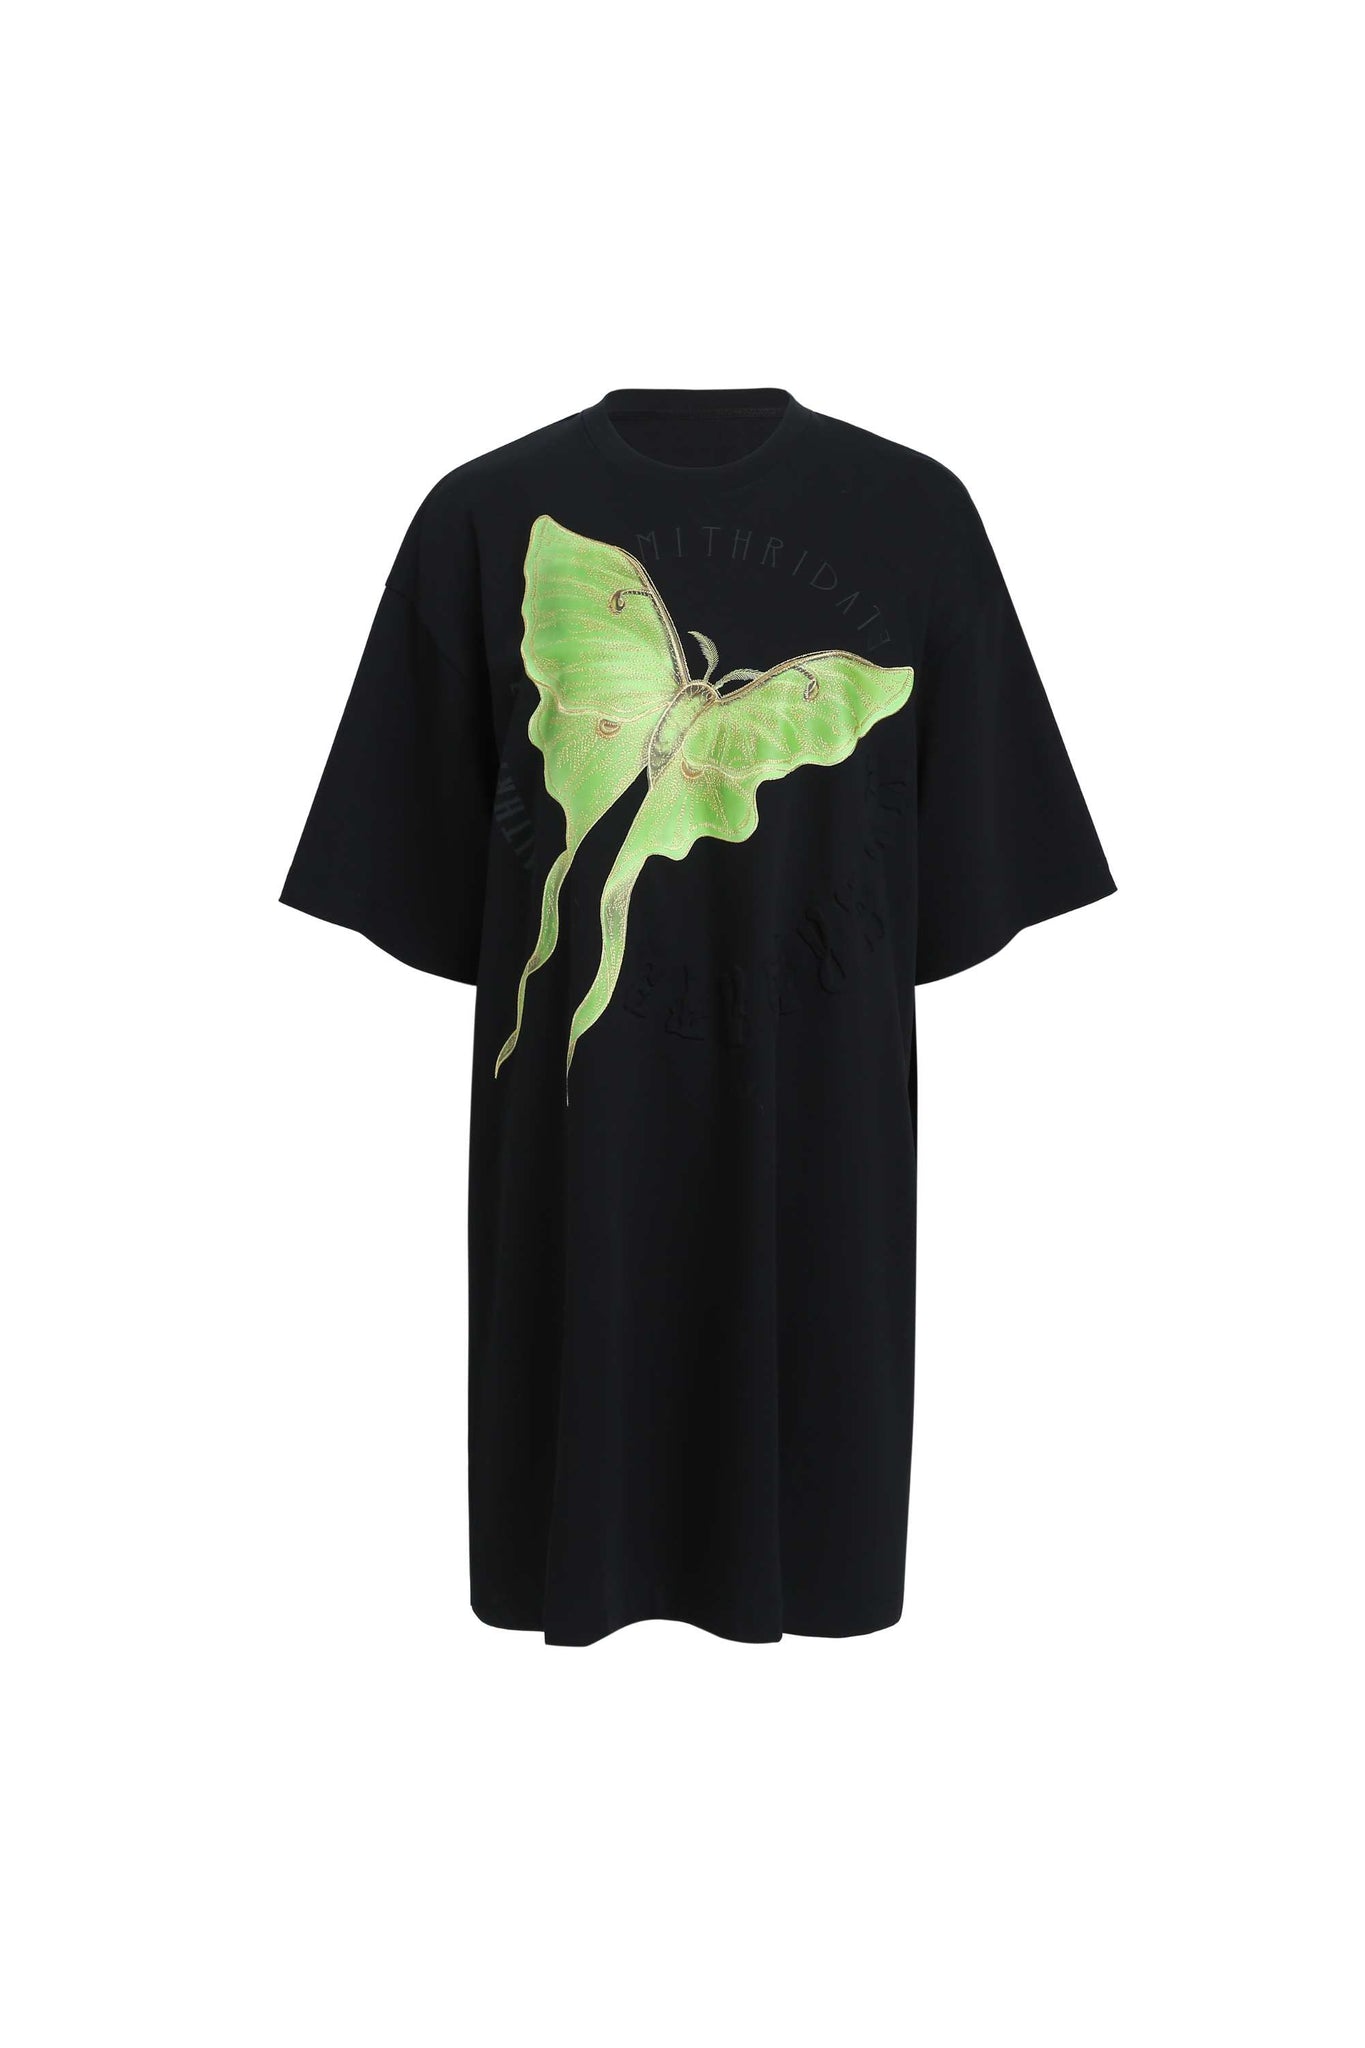 Moth Graphic Black T-Shirt